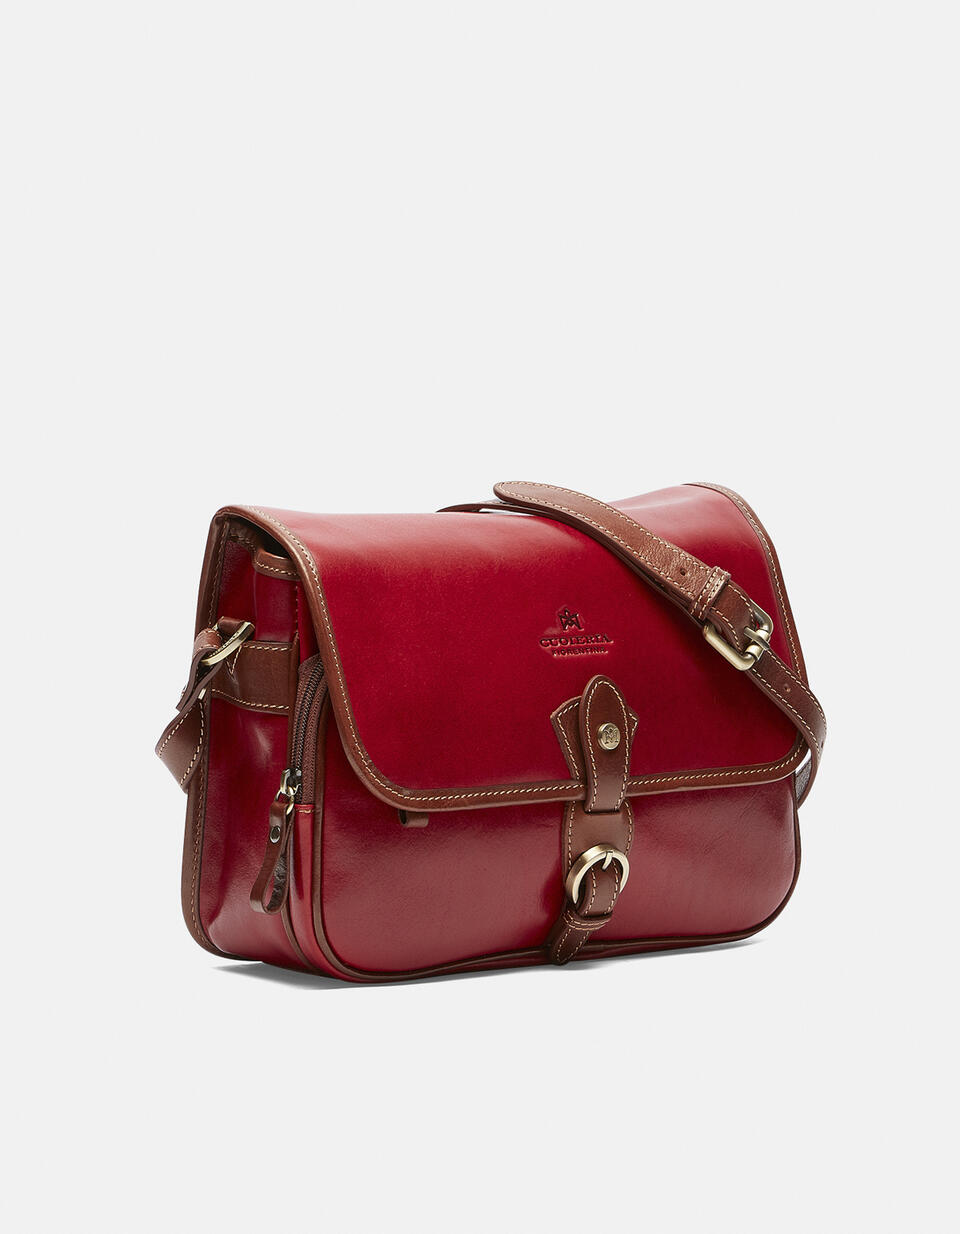 Big Leather messenger bag - Messenger Bags - WOMEN'S BAGS | bags ROSSOBICOLORE - Messenger Bags - WOMEN'S BAGS | bagsCuoieria Fiorentina